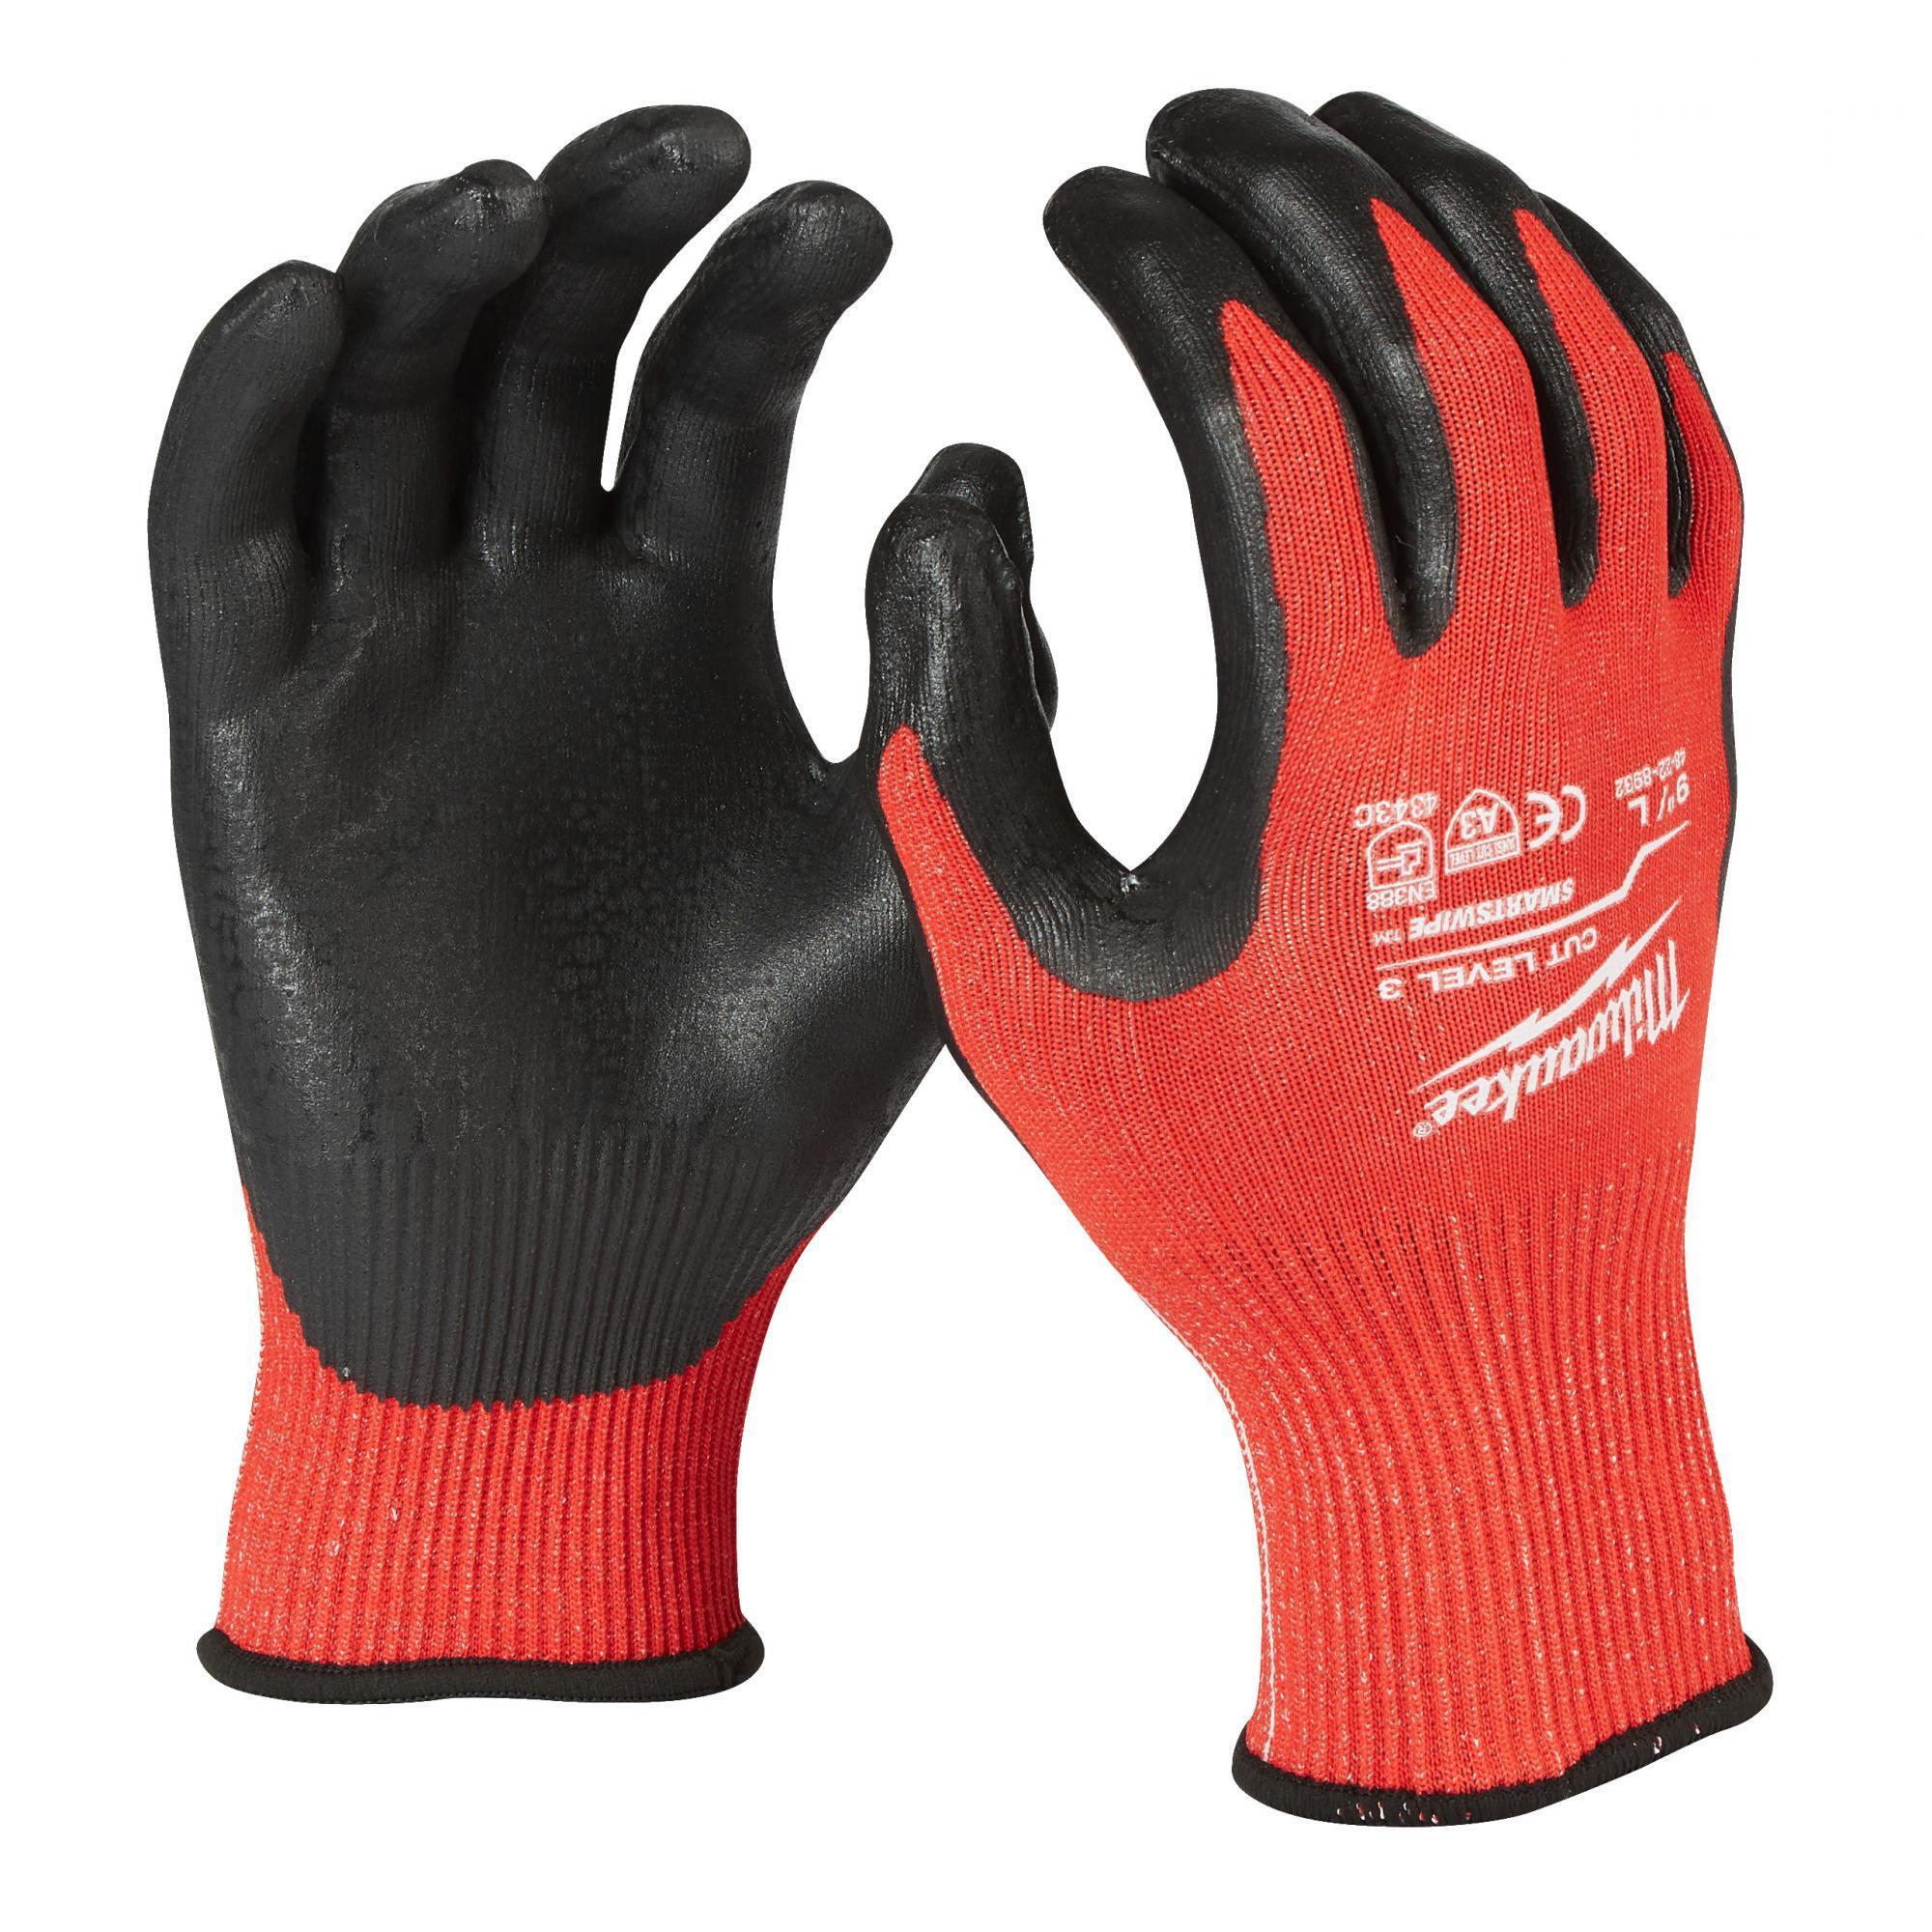 Перчатки защитные Milwaukee Cut Level 3/C, размер L/9, 4932471619, 1 пара перчатки milwaukee